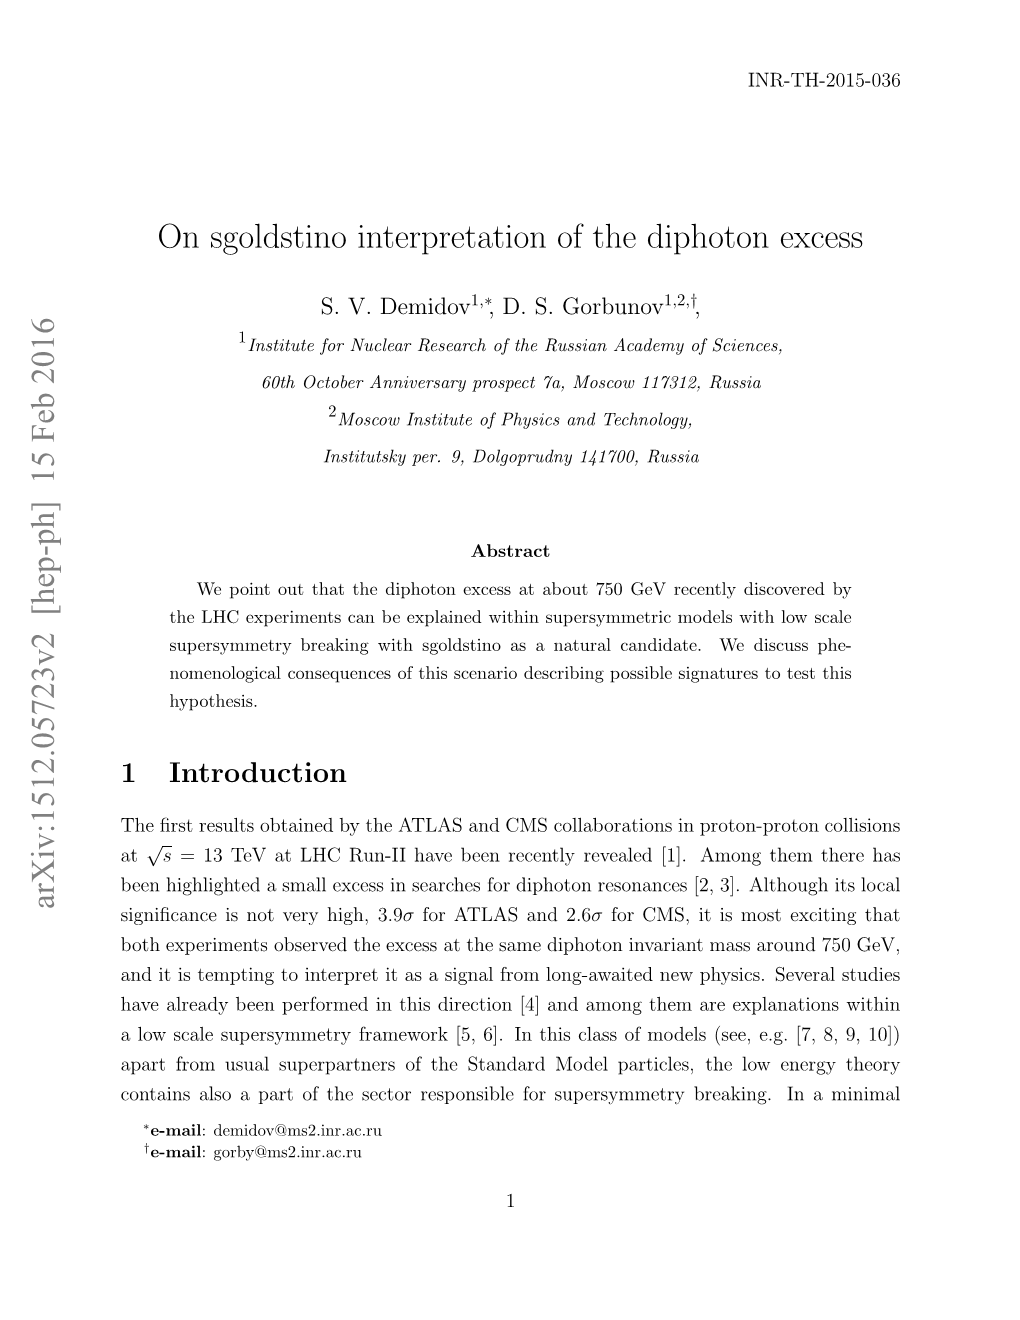 On Sgoldstino Interpretation of the Diphoton Excess